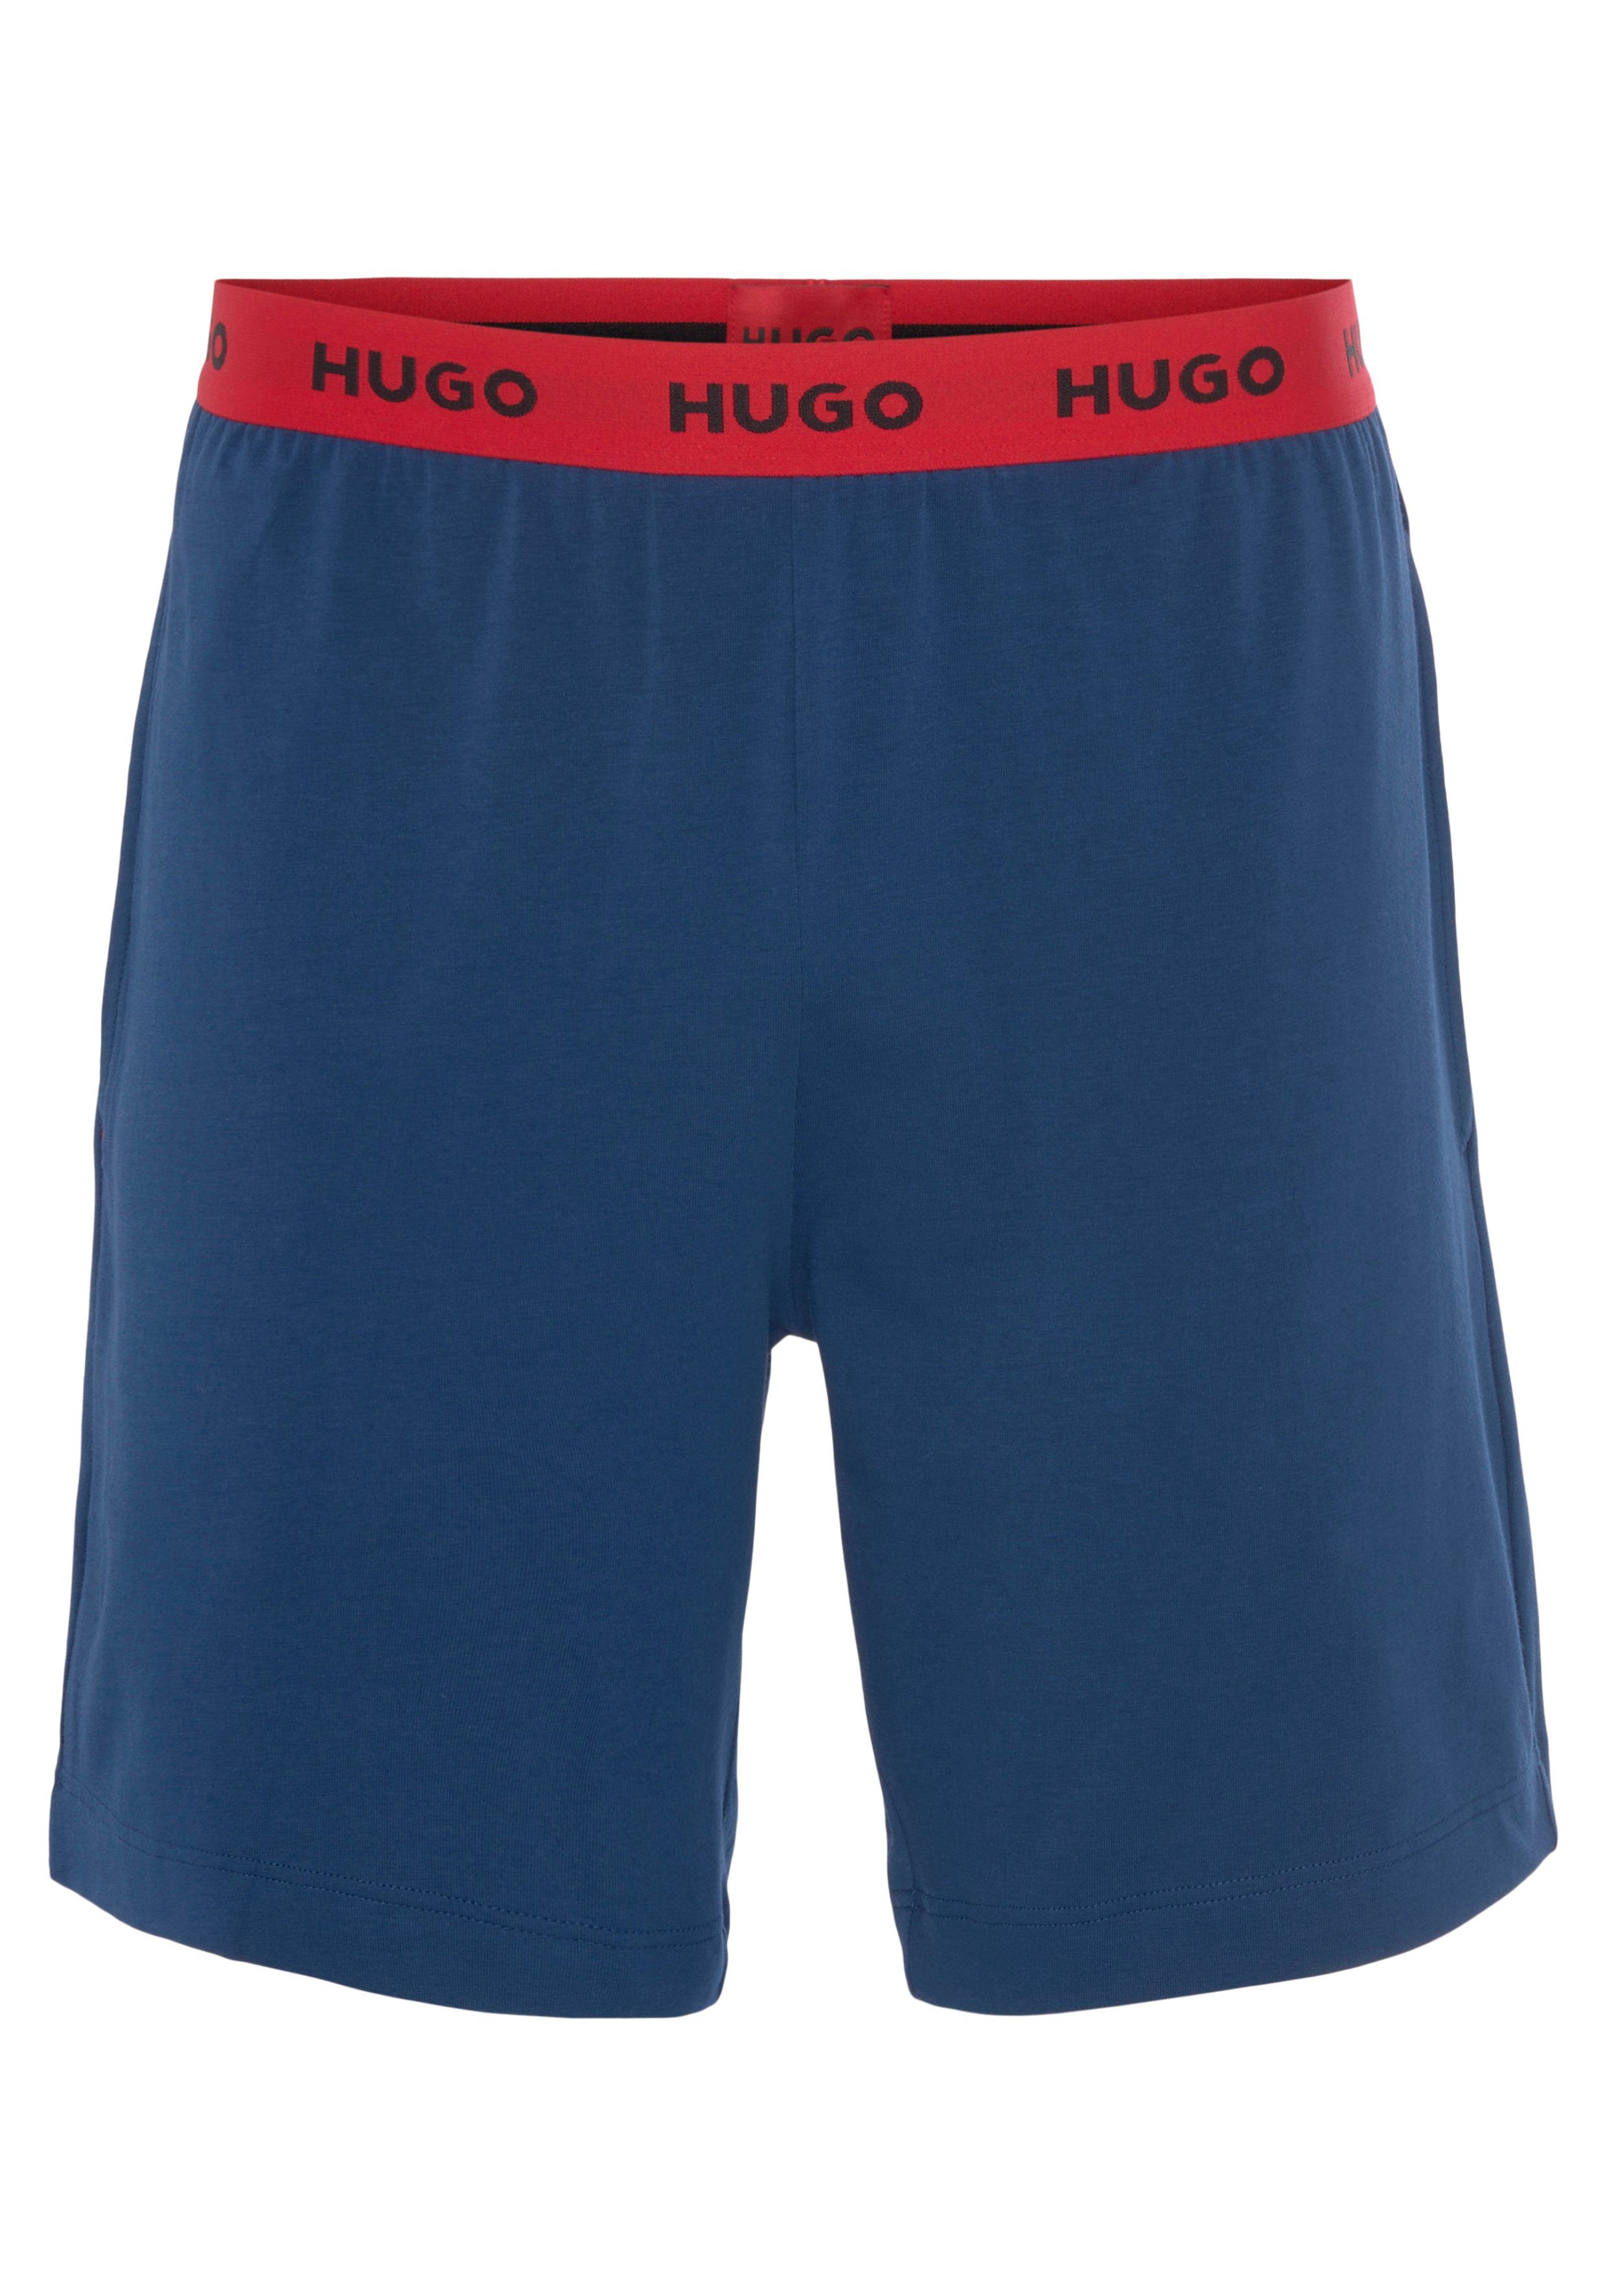 HUGO Pyjamahose 417 Short Pant Linked navy